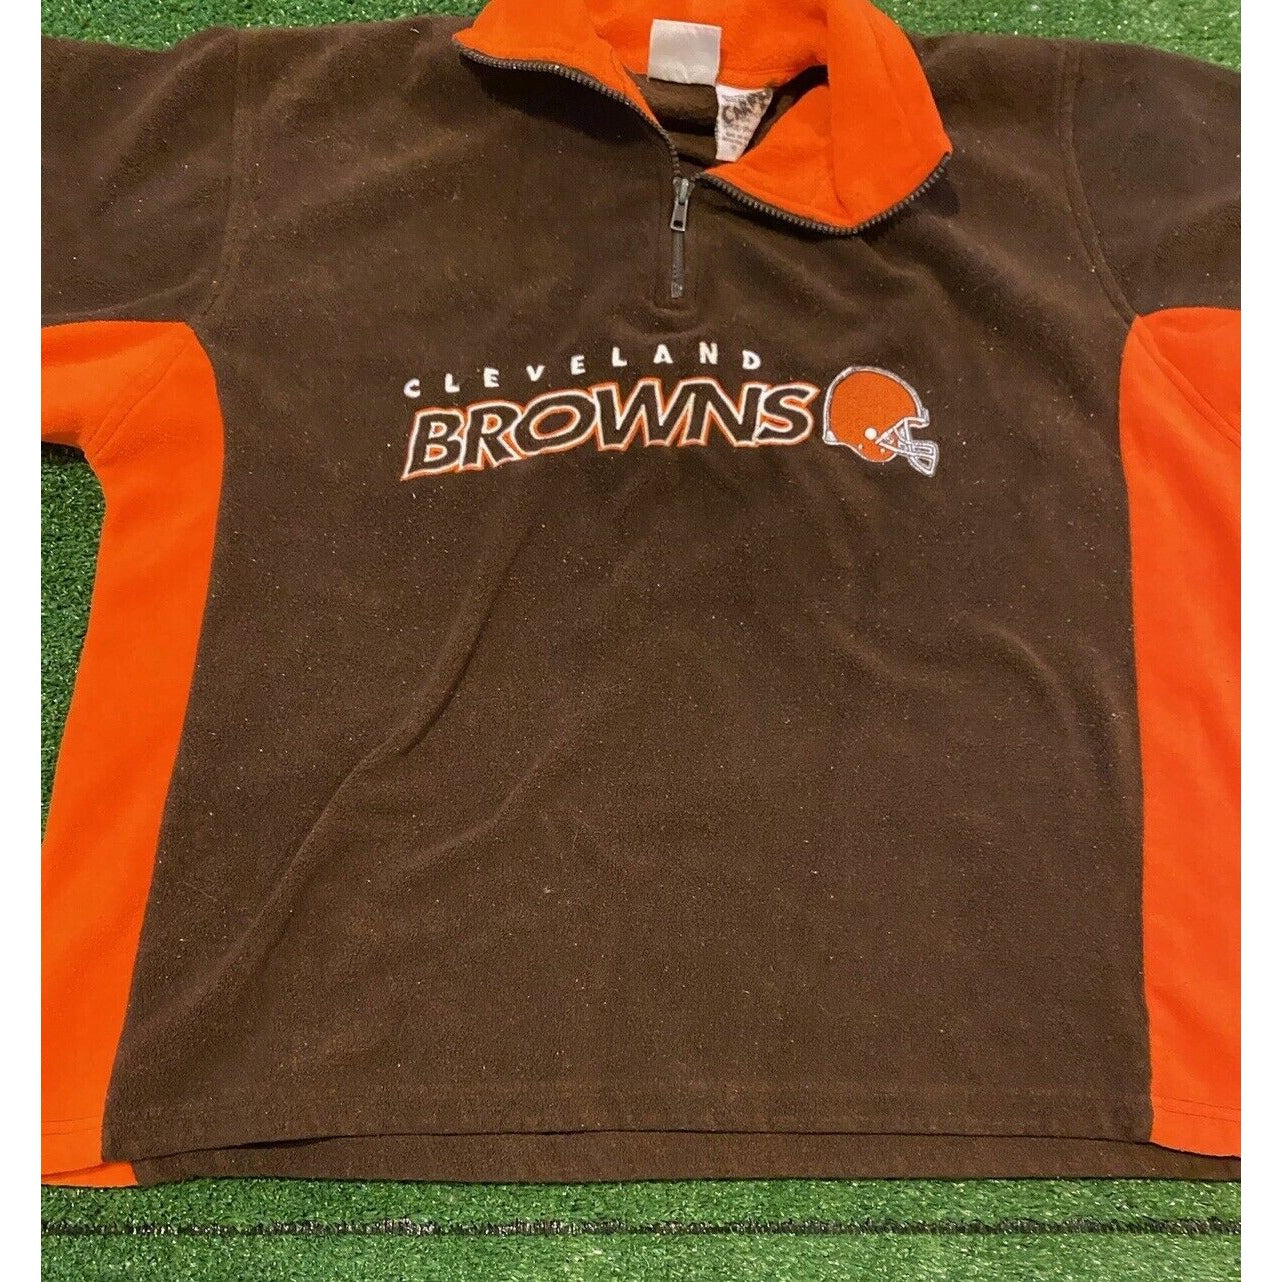 Vintage Cleveland Browns sweatshirt large 1/4 zip orange brown mens crew neck